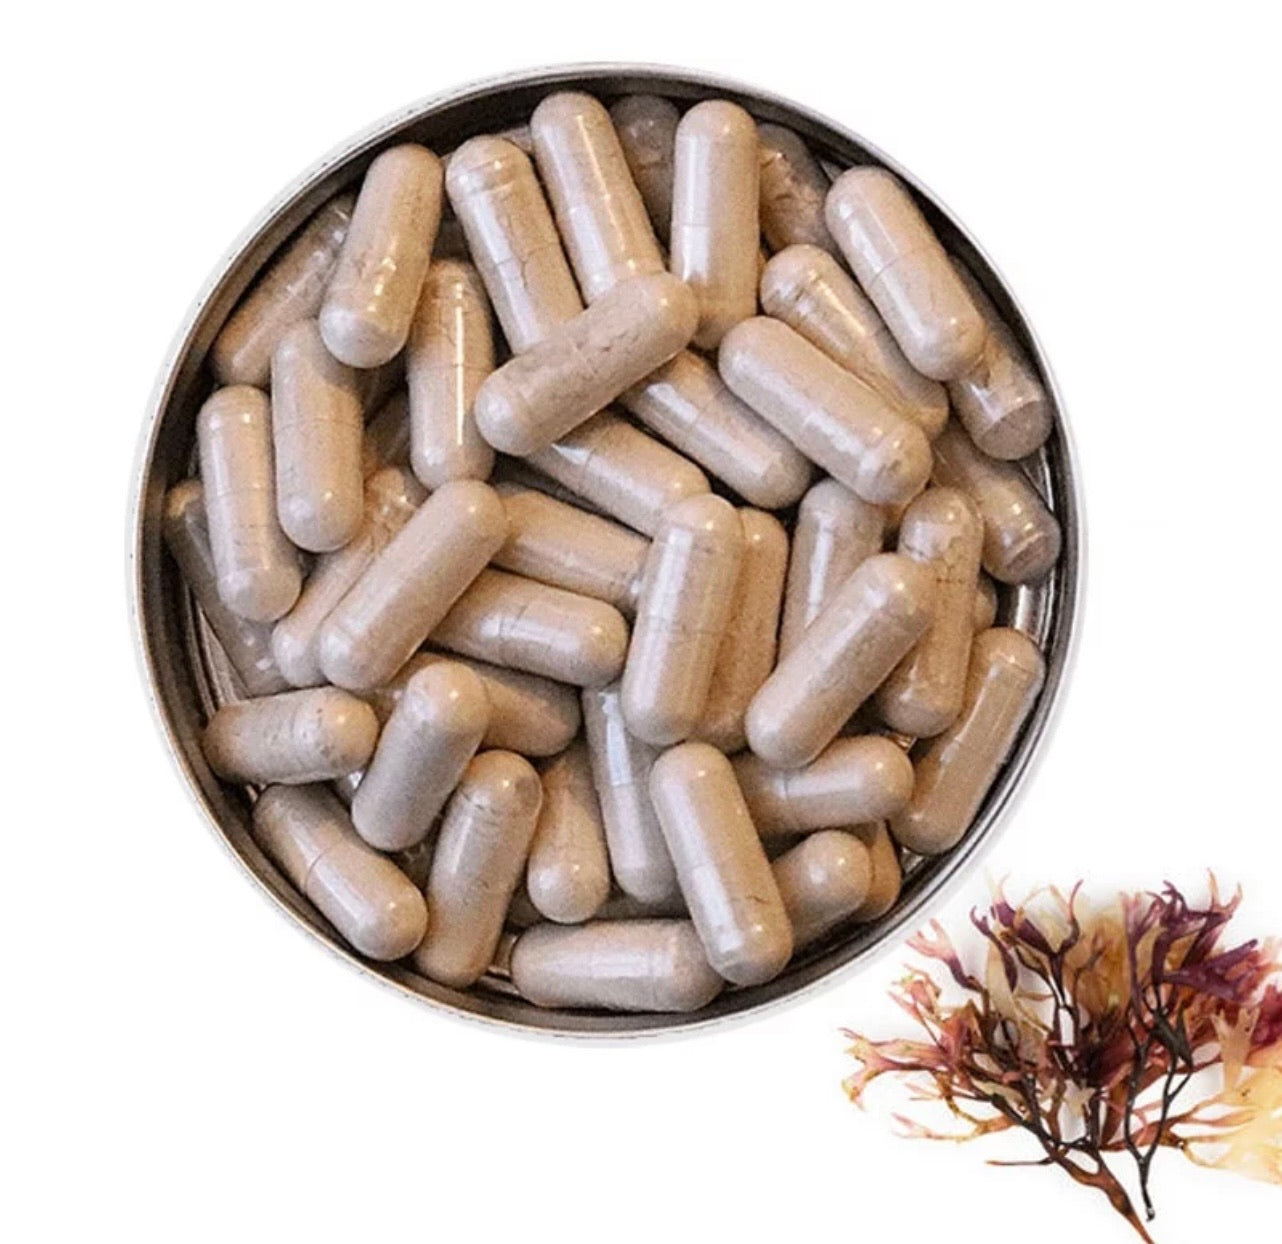 2000 /1 kg capsules (sea moss, burdock root and bladderwrack mixed)